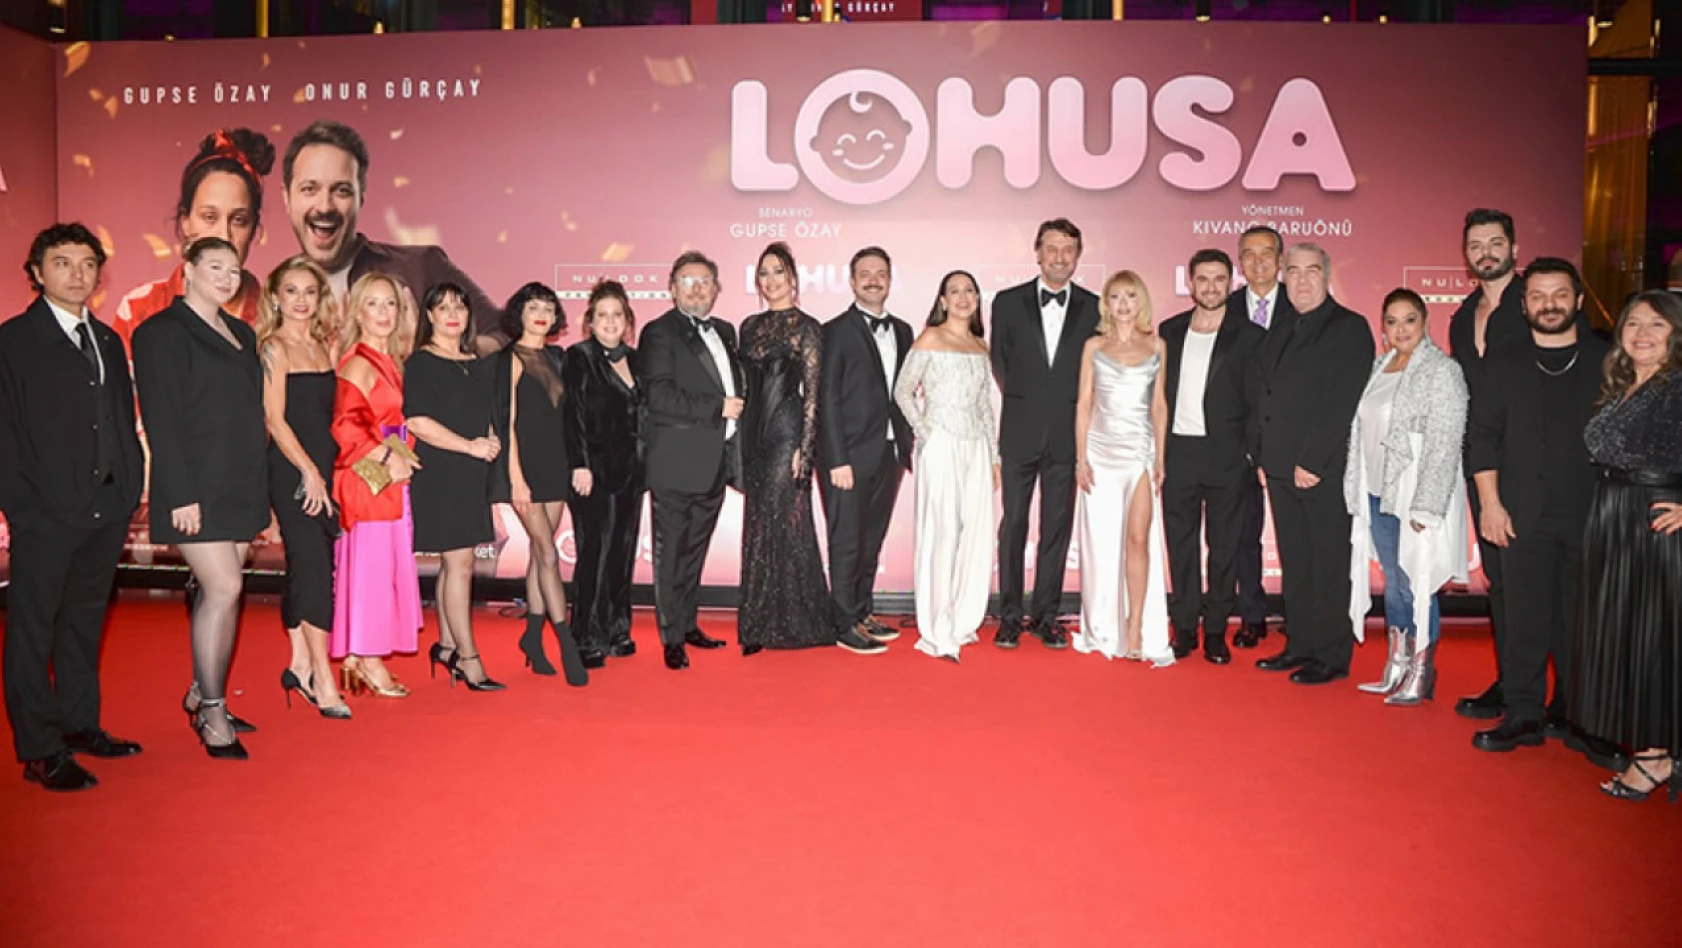 Gupse Özay'ın yeni komedisi 'Lohusa' filmine kahkaha dolu gala